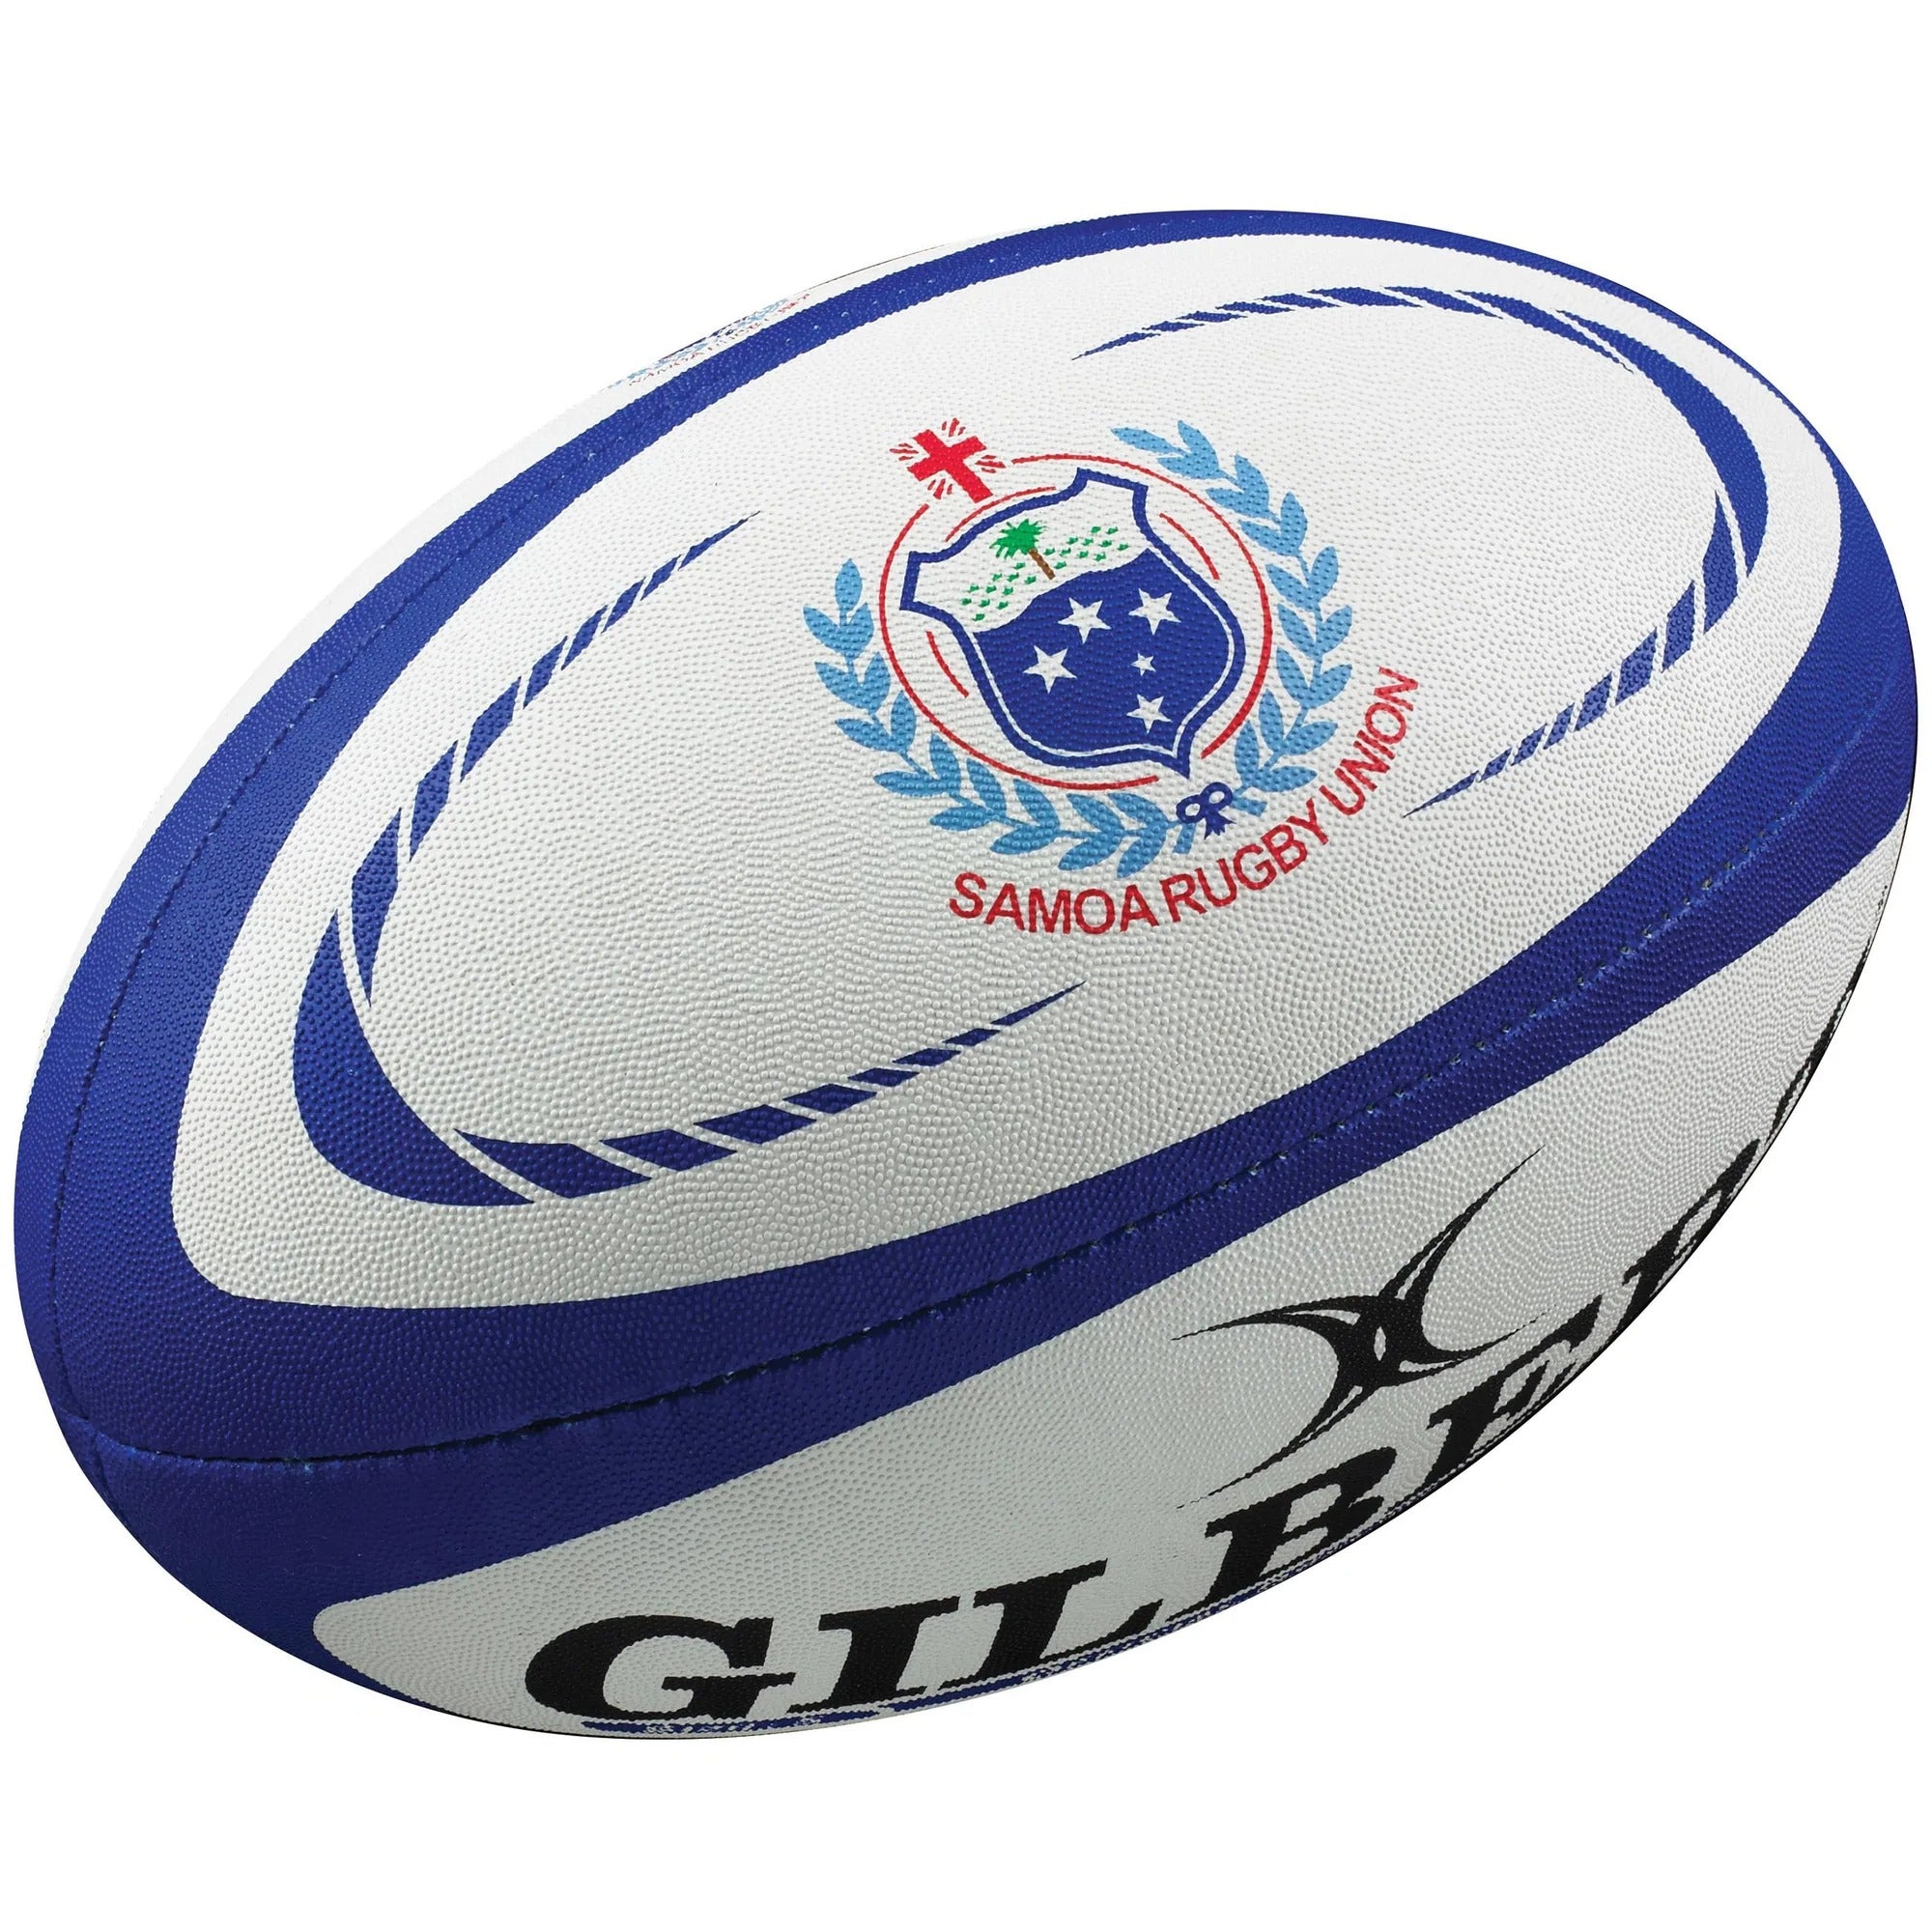 Gilbert Canada Mini Rugby Ball